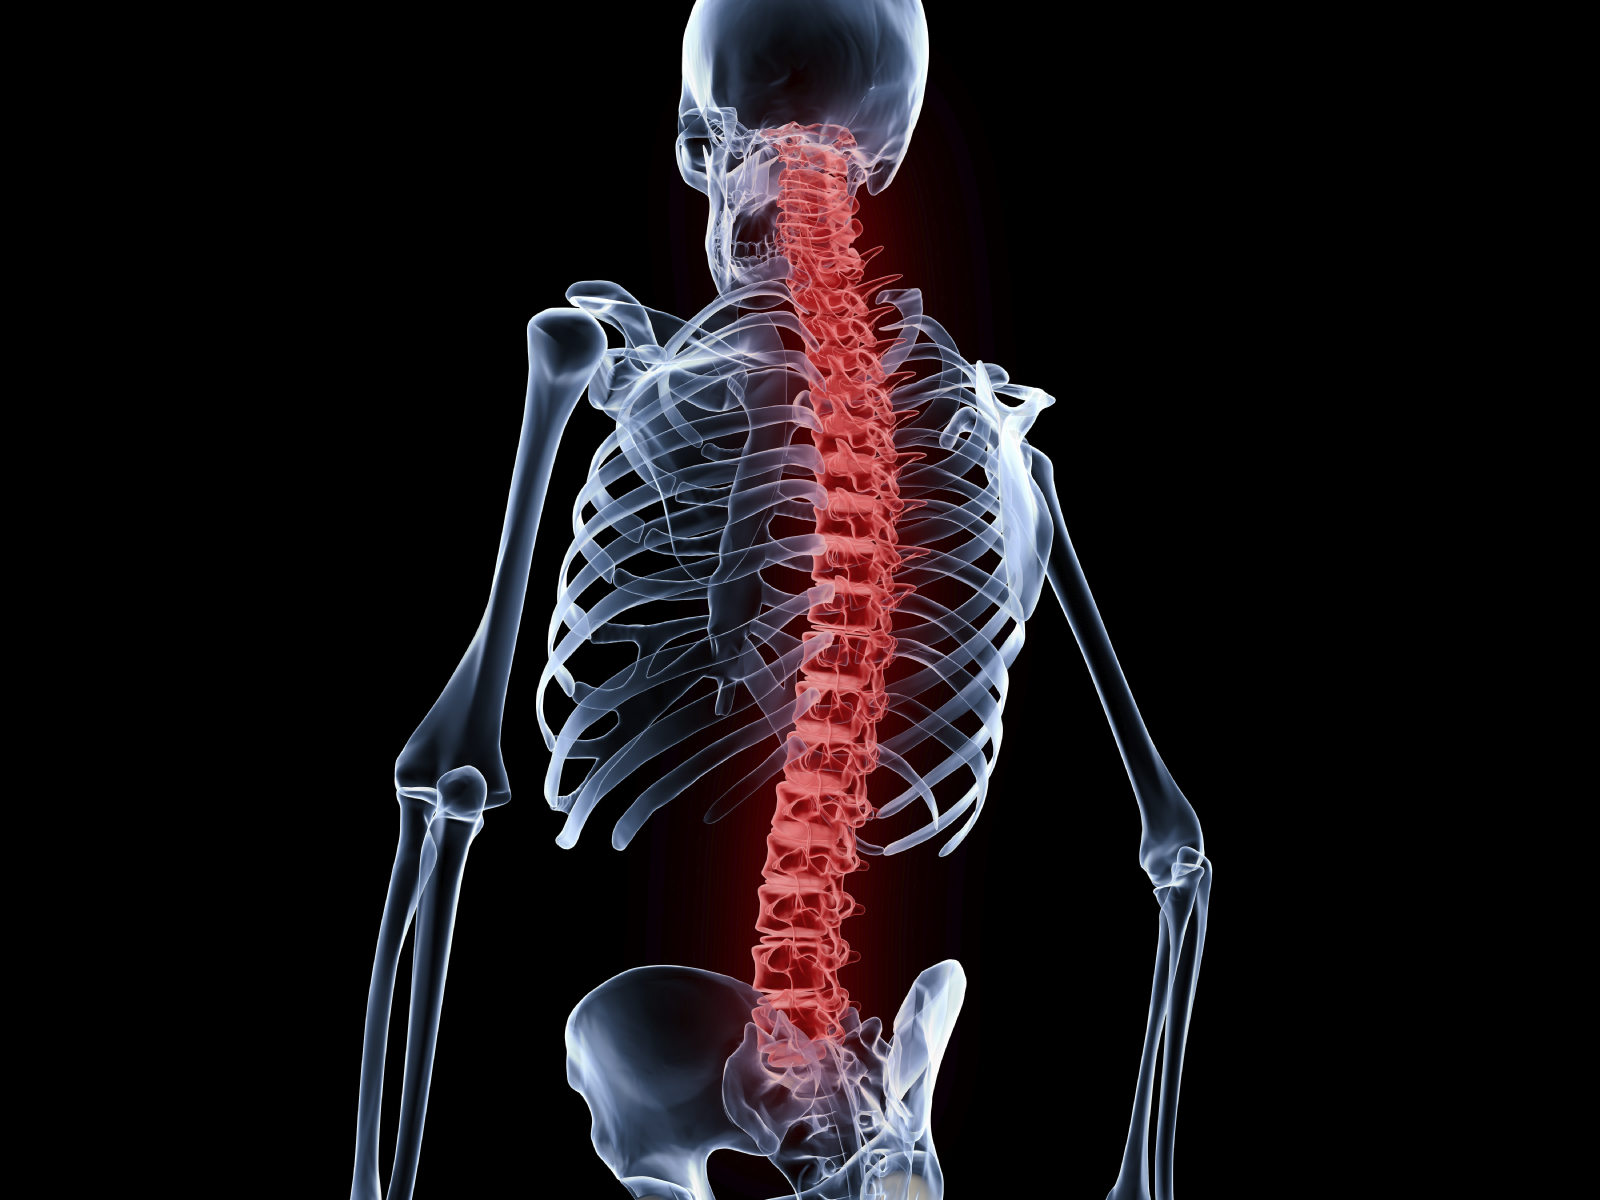 Red spine and vertebral column of a human skeleton